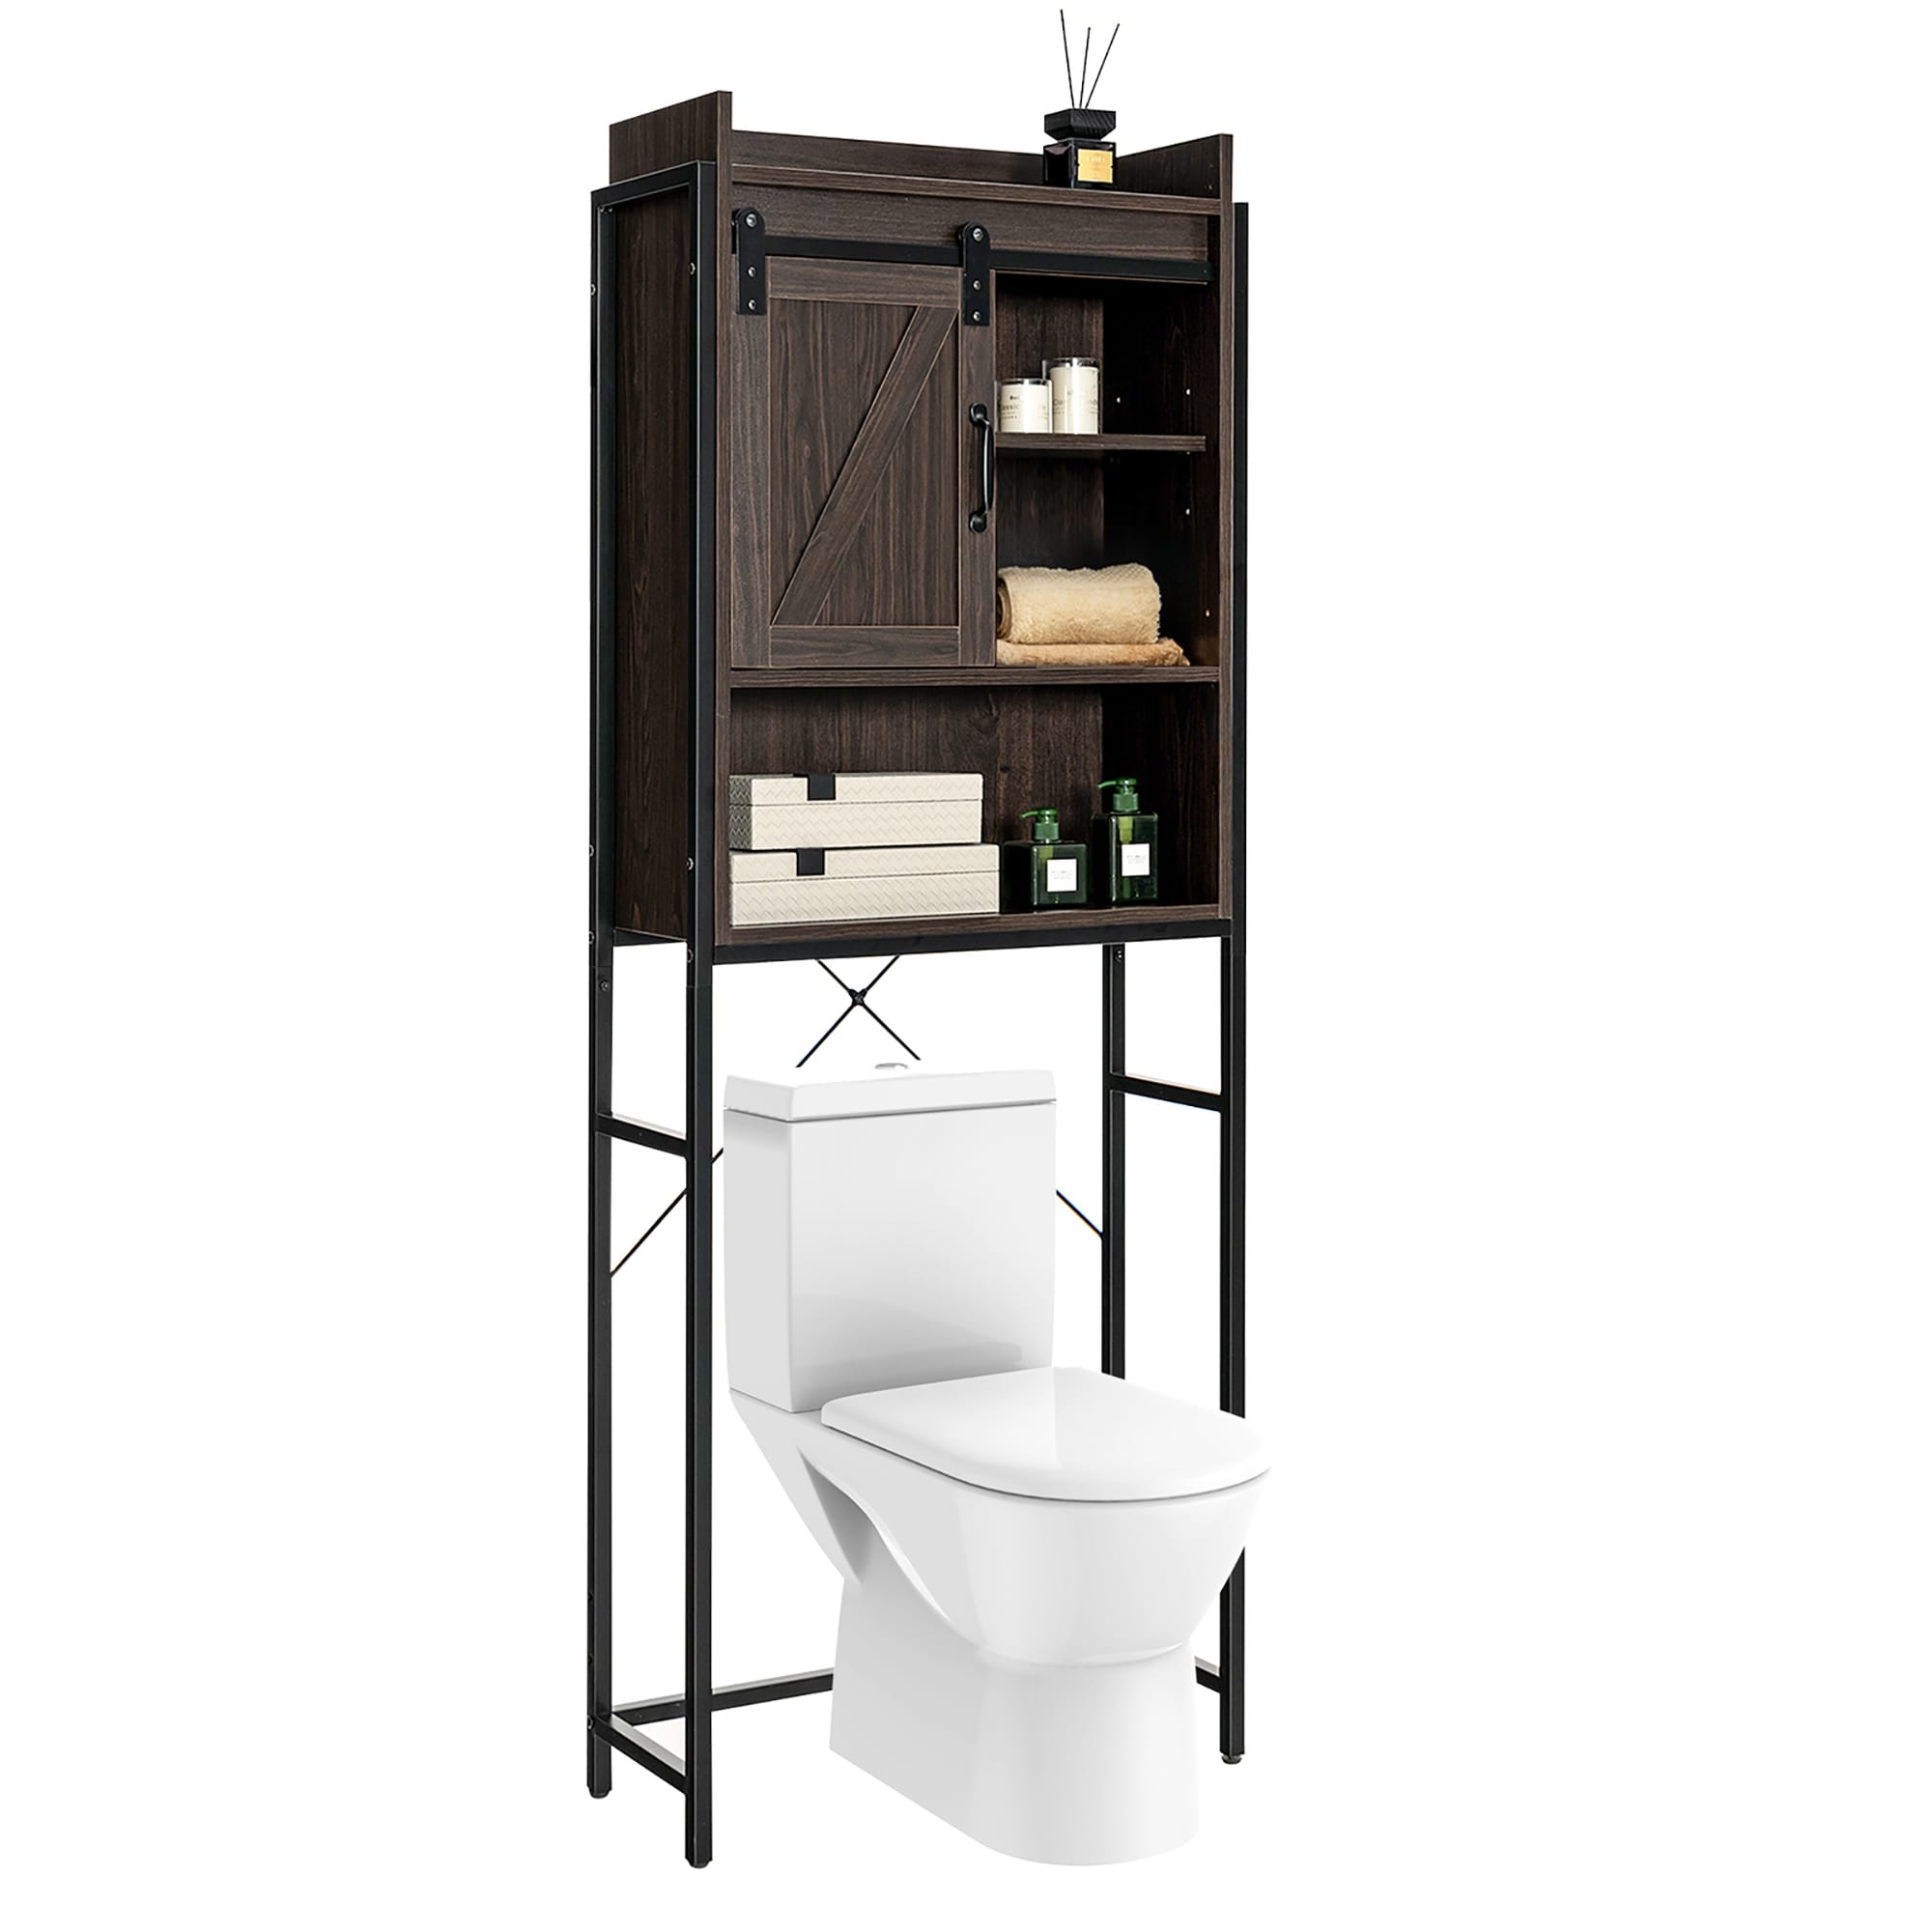 https://ak1.ostkcdn.com/images/products/is/images/direct/4e287c44d1a5d36b3024b16f5d5402884abf502e/Costway-Over-The-Toilet-Storage-Cabinet-Bathroom-Organizer-w--Sliding.jpg